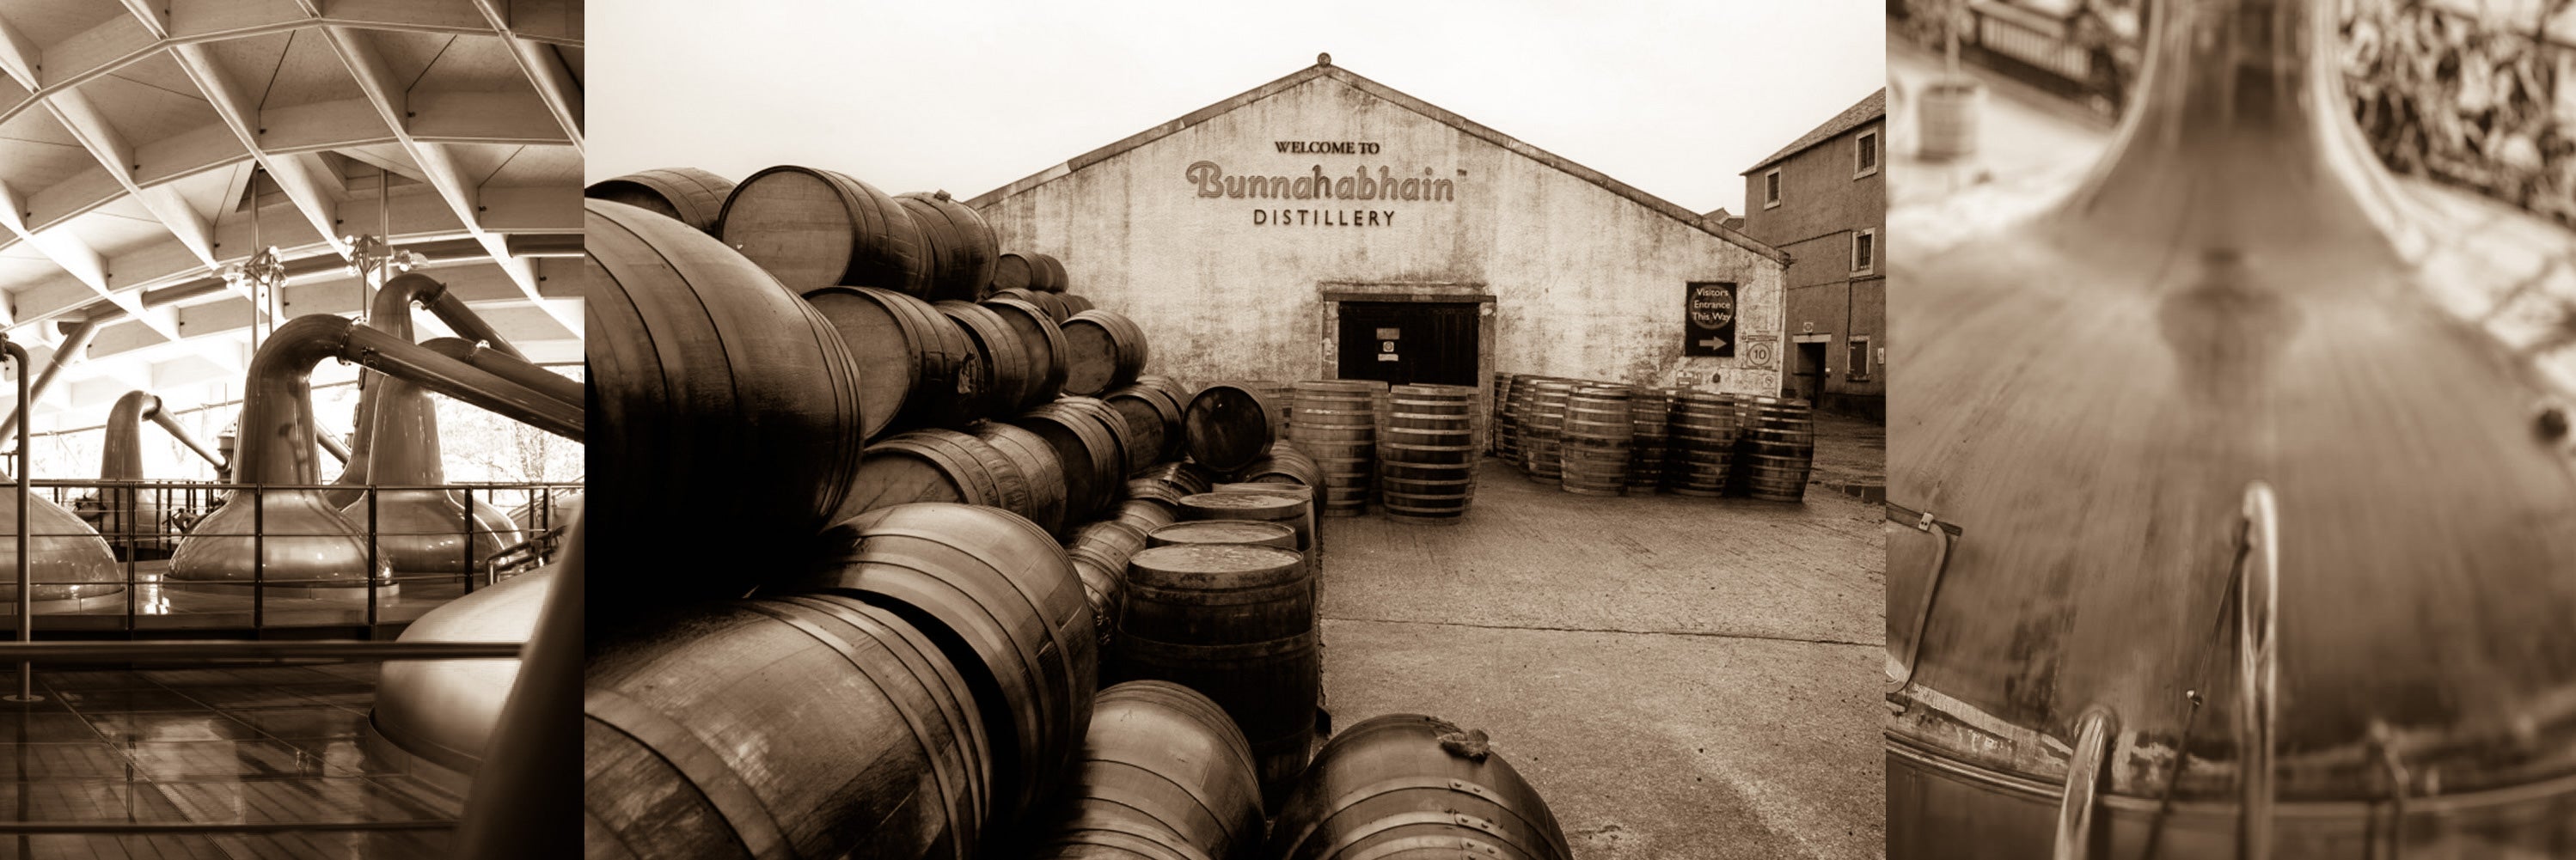 Barrel casks and fermentation vessels for liquor